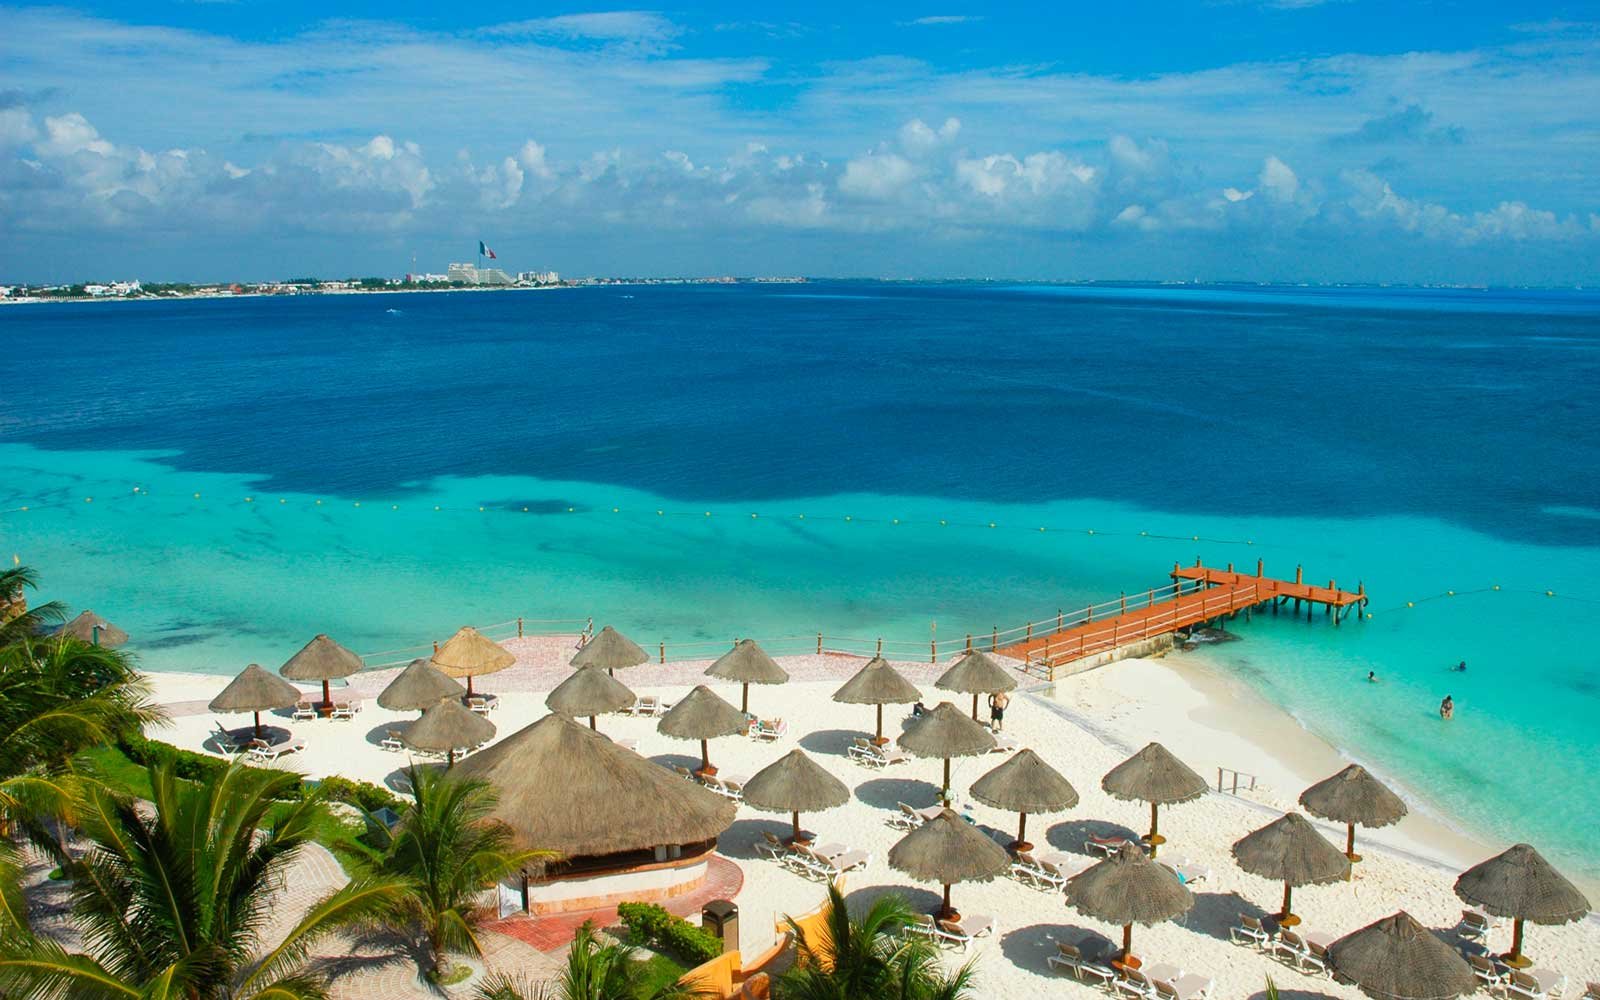 Burlington VT to Cancun Mexico $336 RT Airfares on JetBlue Basic (Limited Dates November - December 2022)